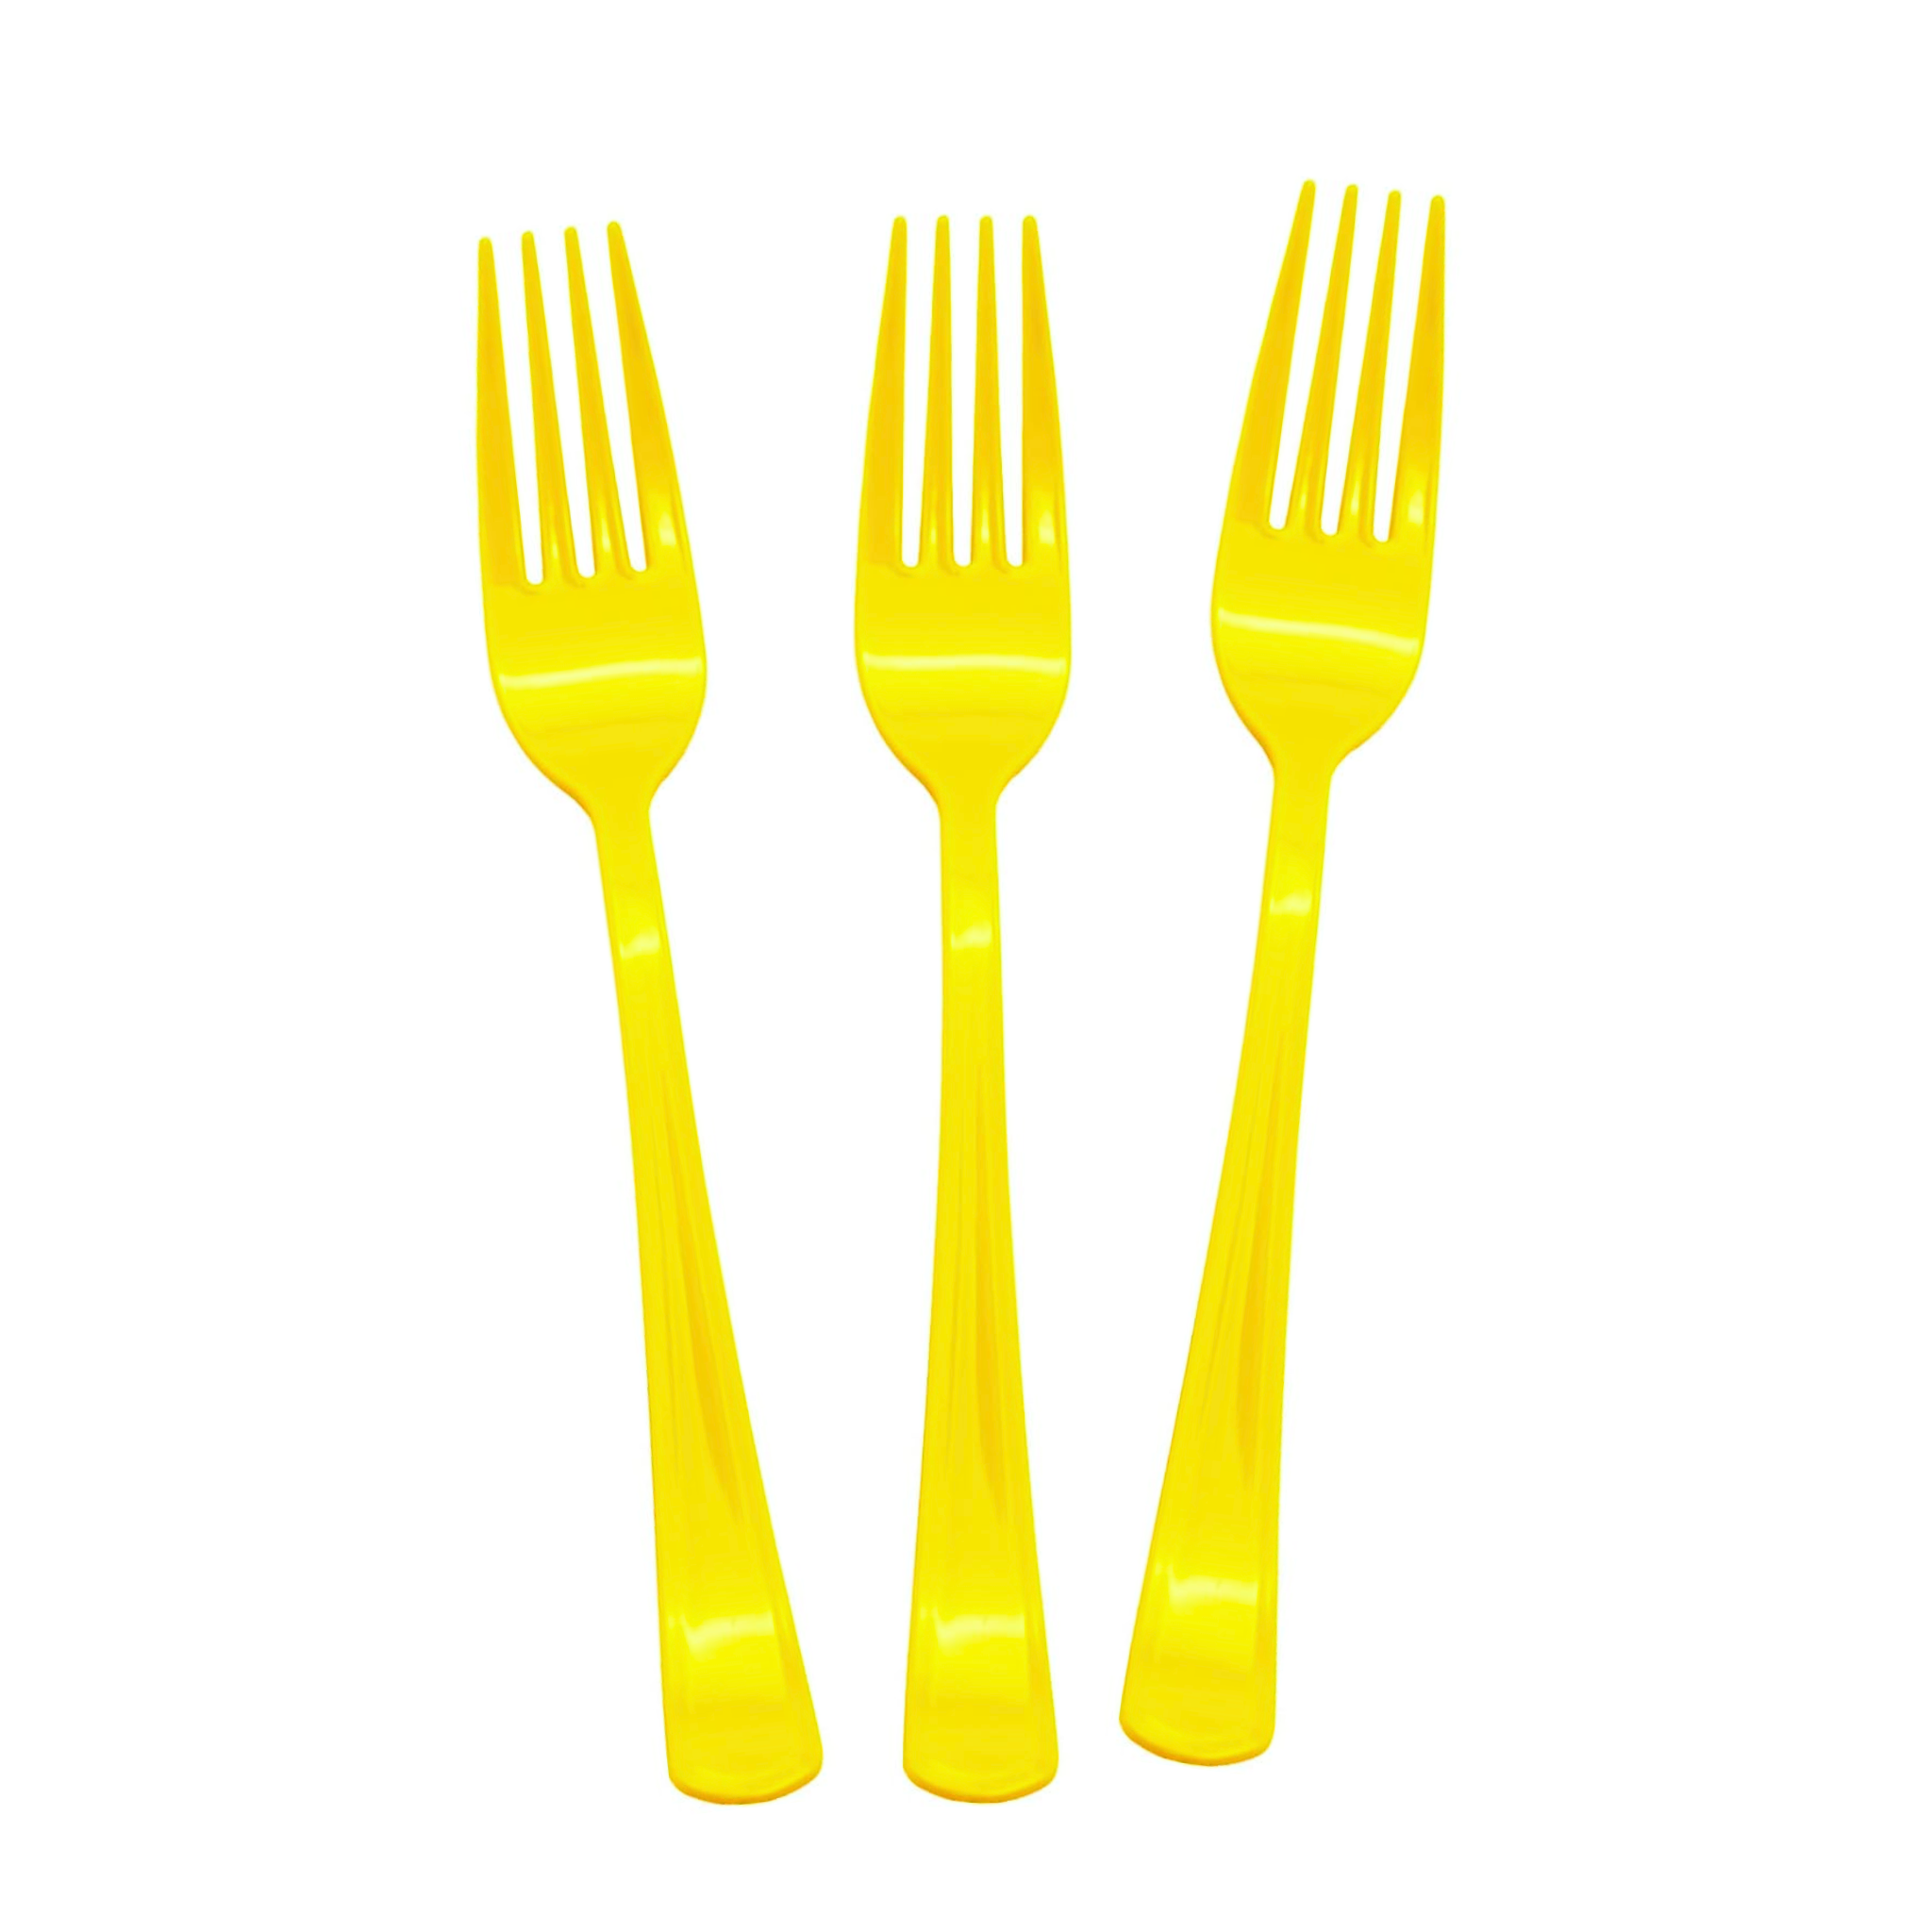 Single-use Cutlery Set (Forks)